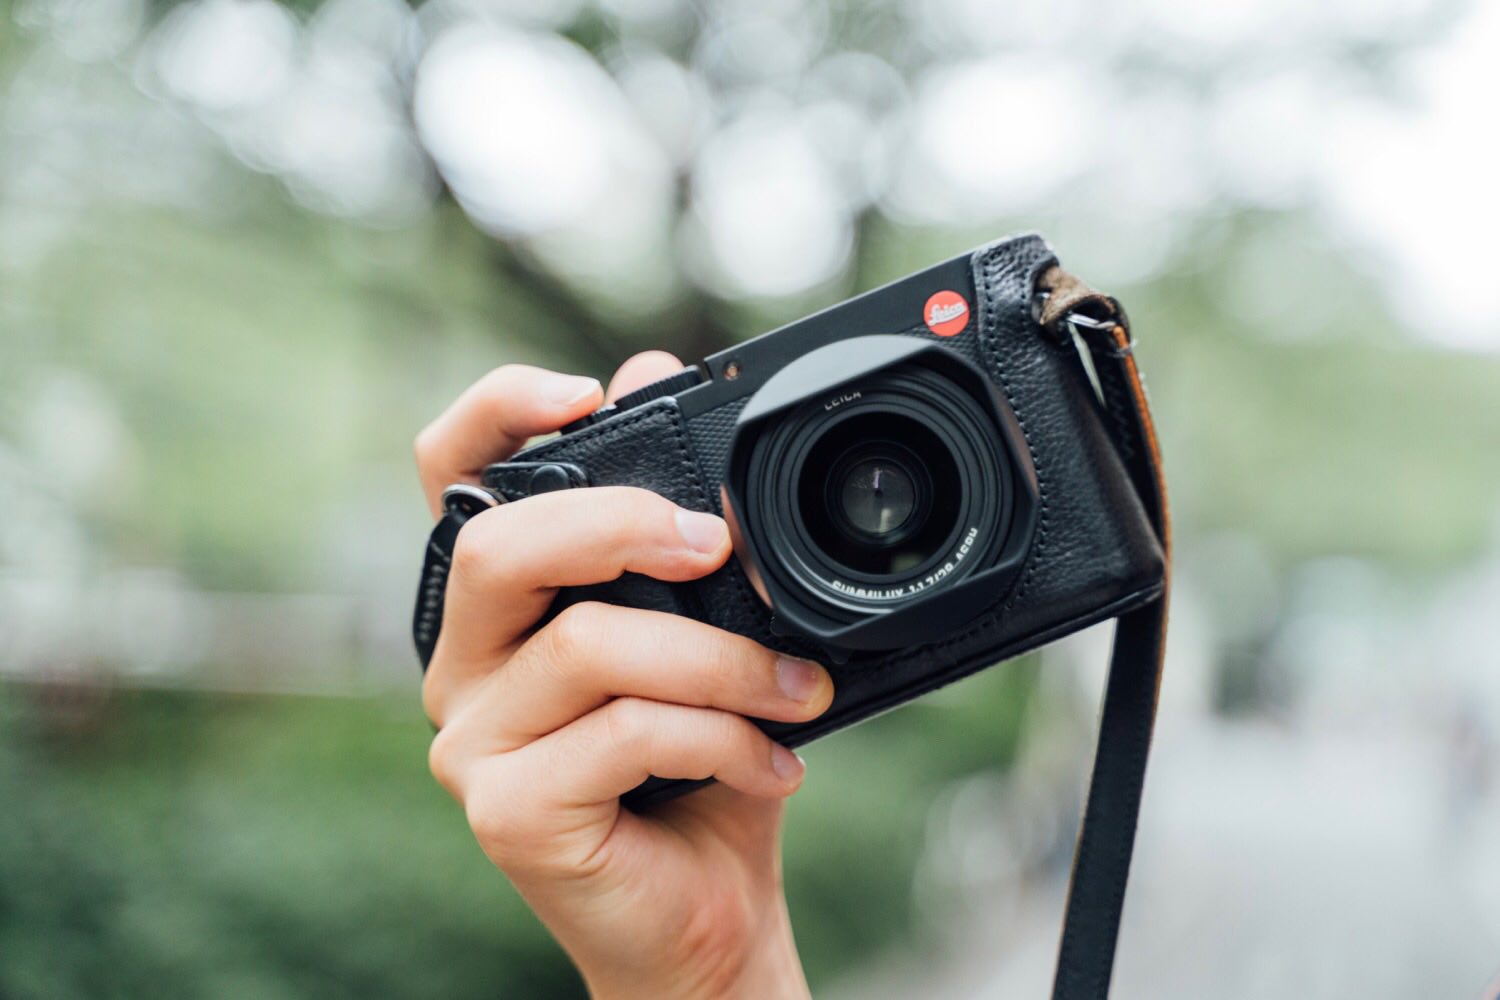 Leica QのボディケースはARTISAN & ARTISTのレザーケースがオススメ 